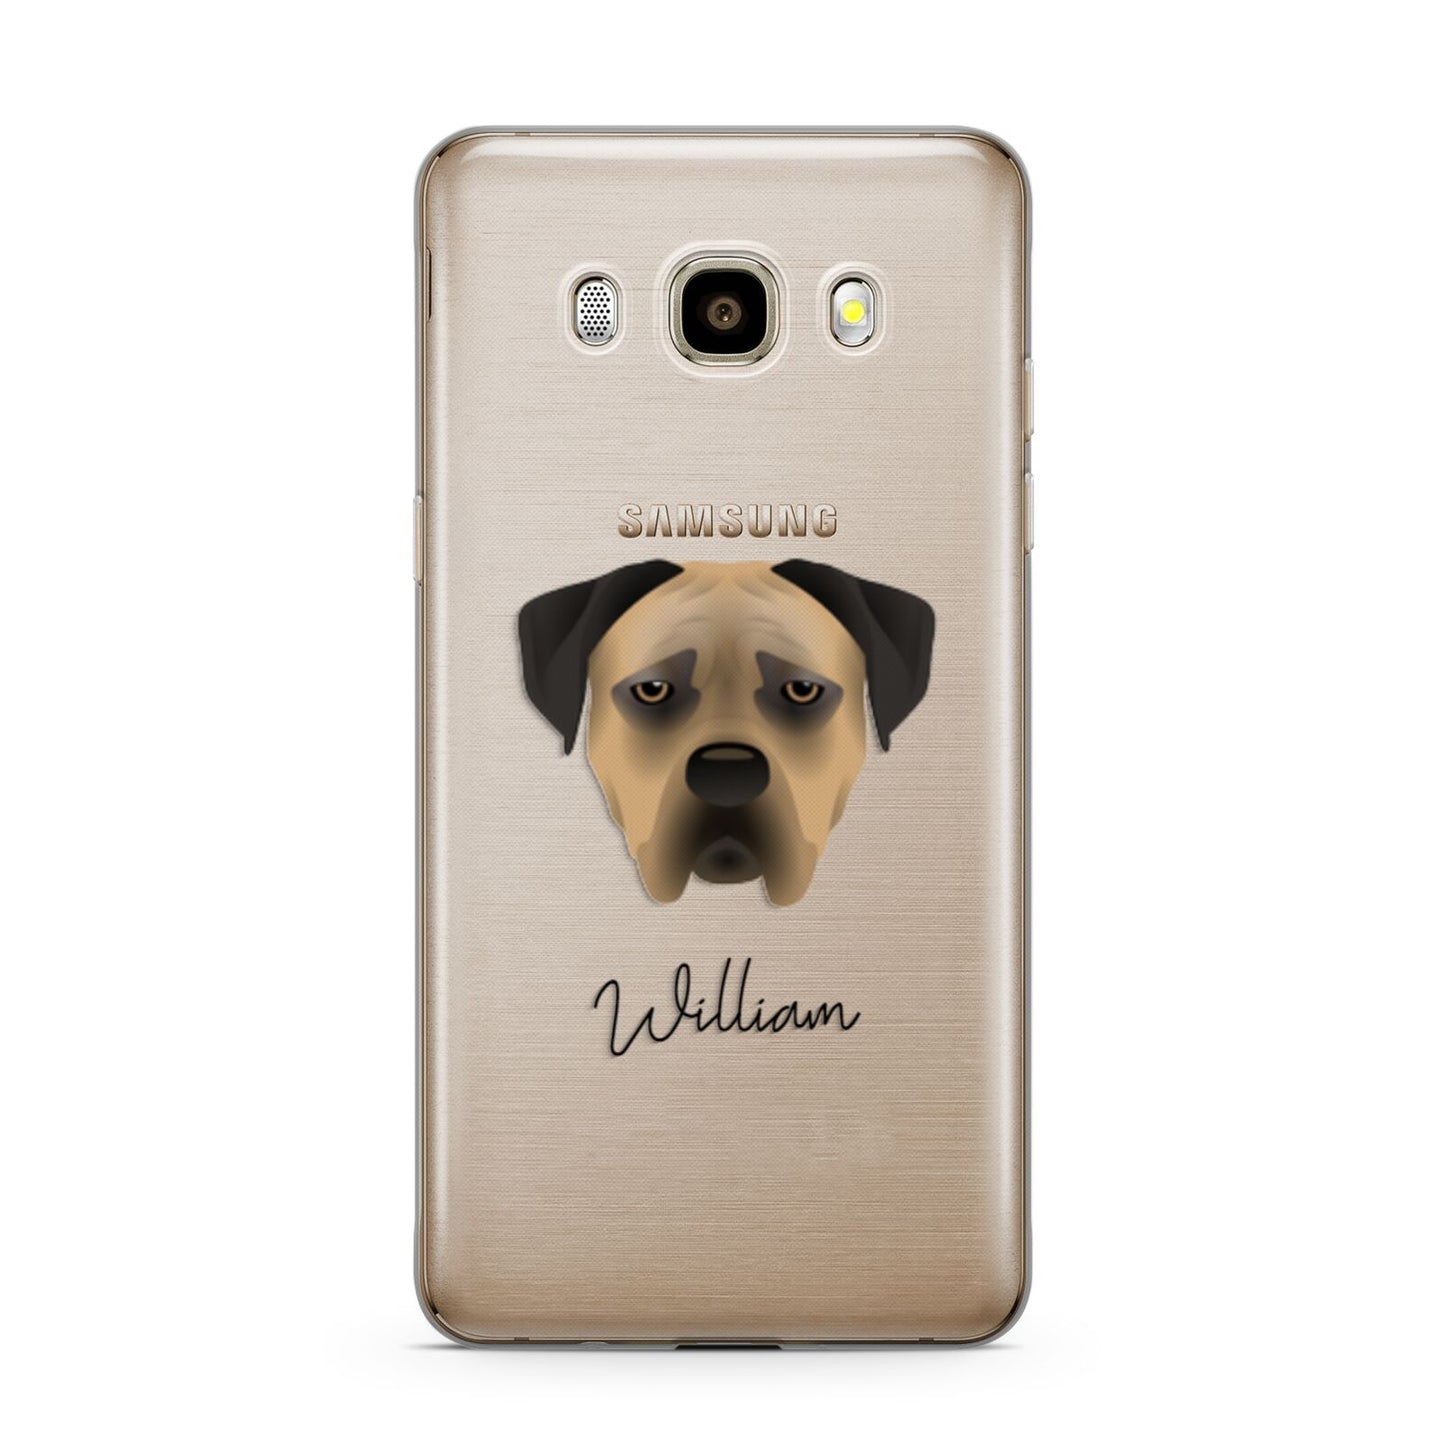 Boerboel Personalised Samsung Galaxy J7 2016 Case on gold phone